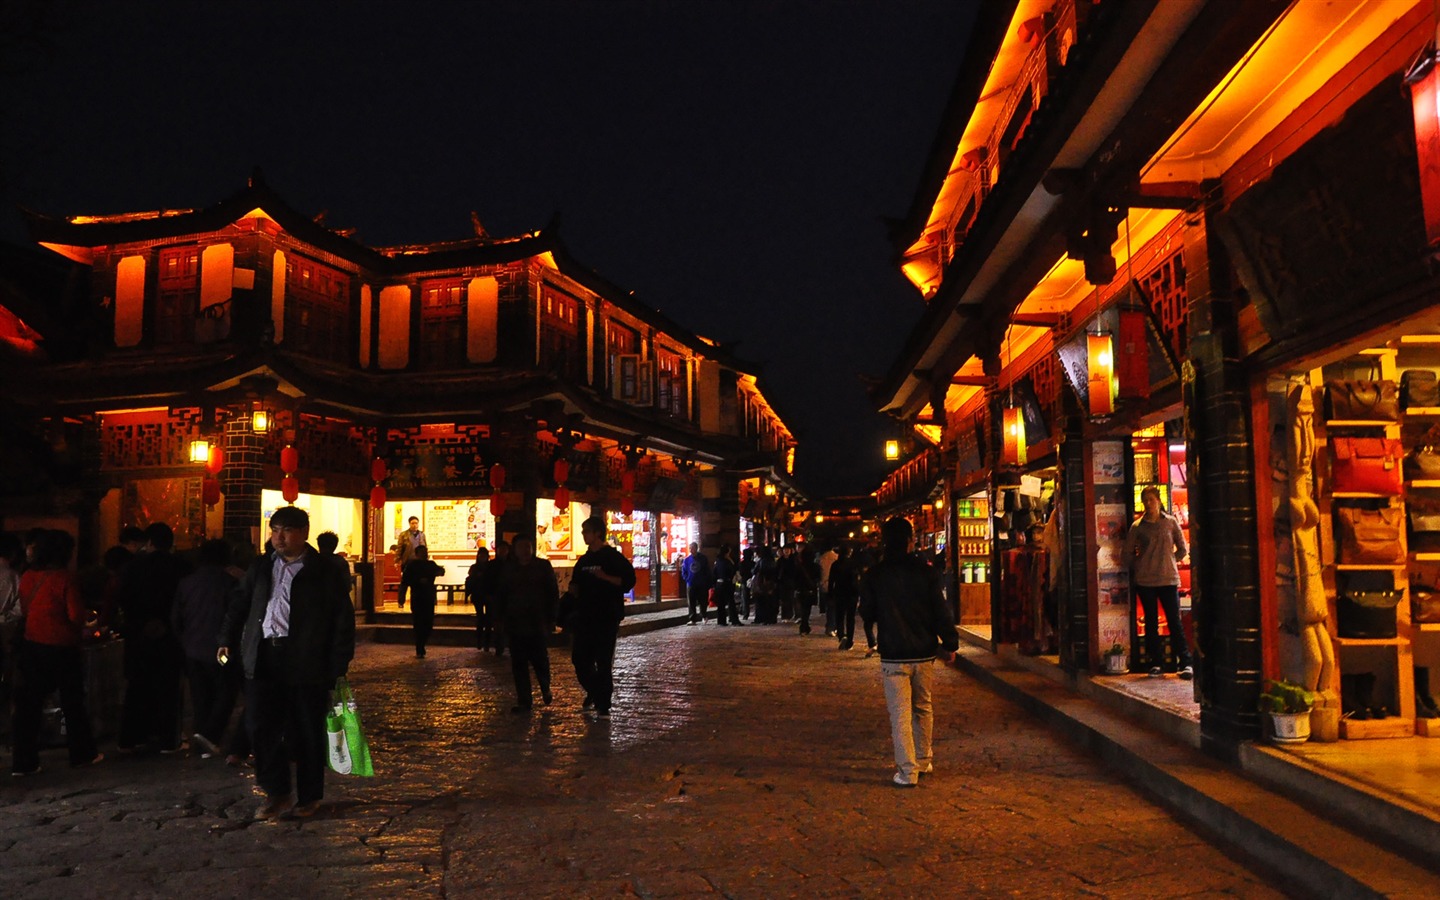 Lijiang Ancient Town Night (Old Hong OK works) #4 - 1440x900